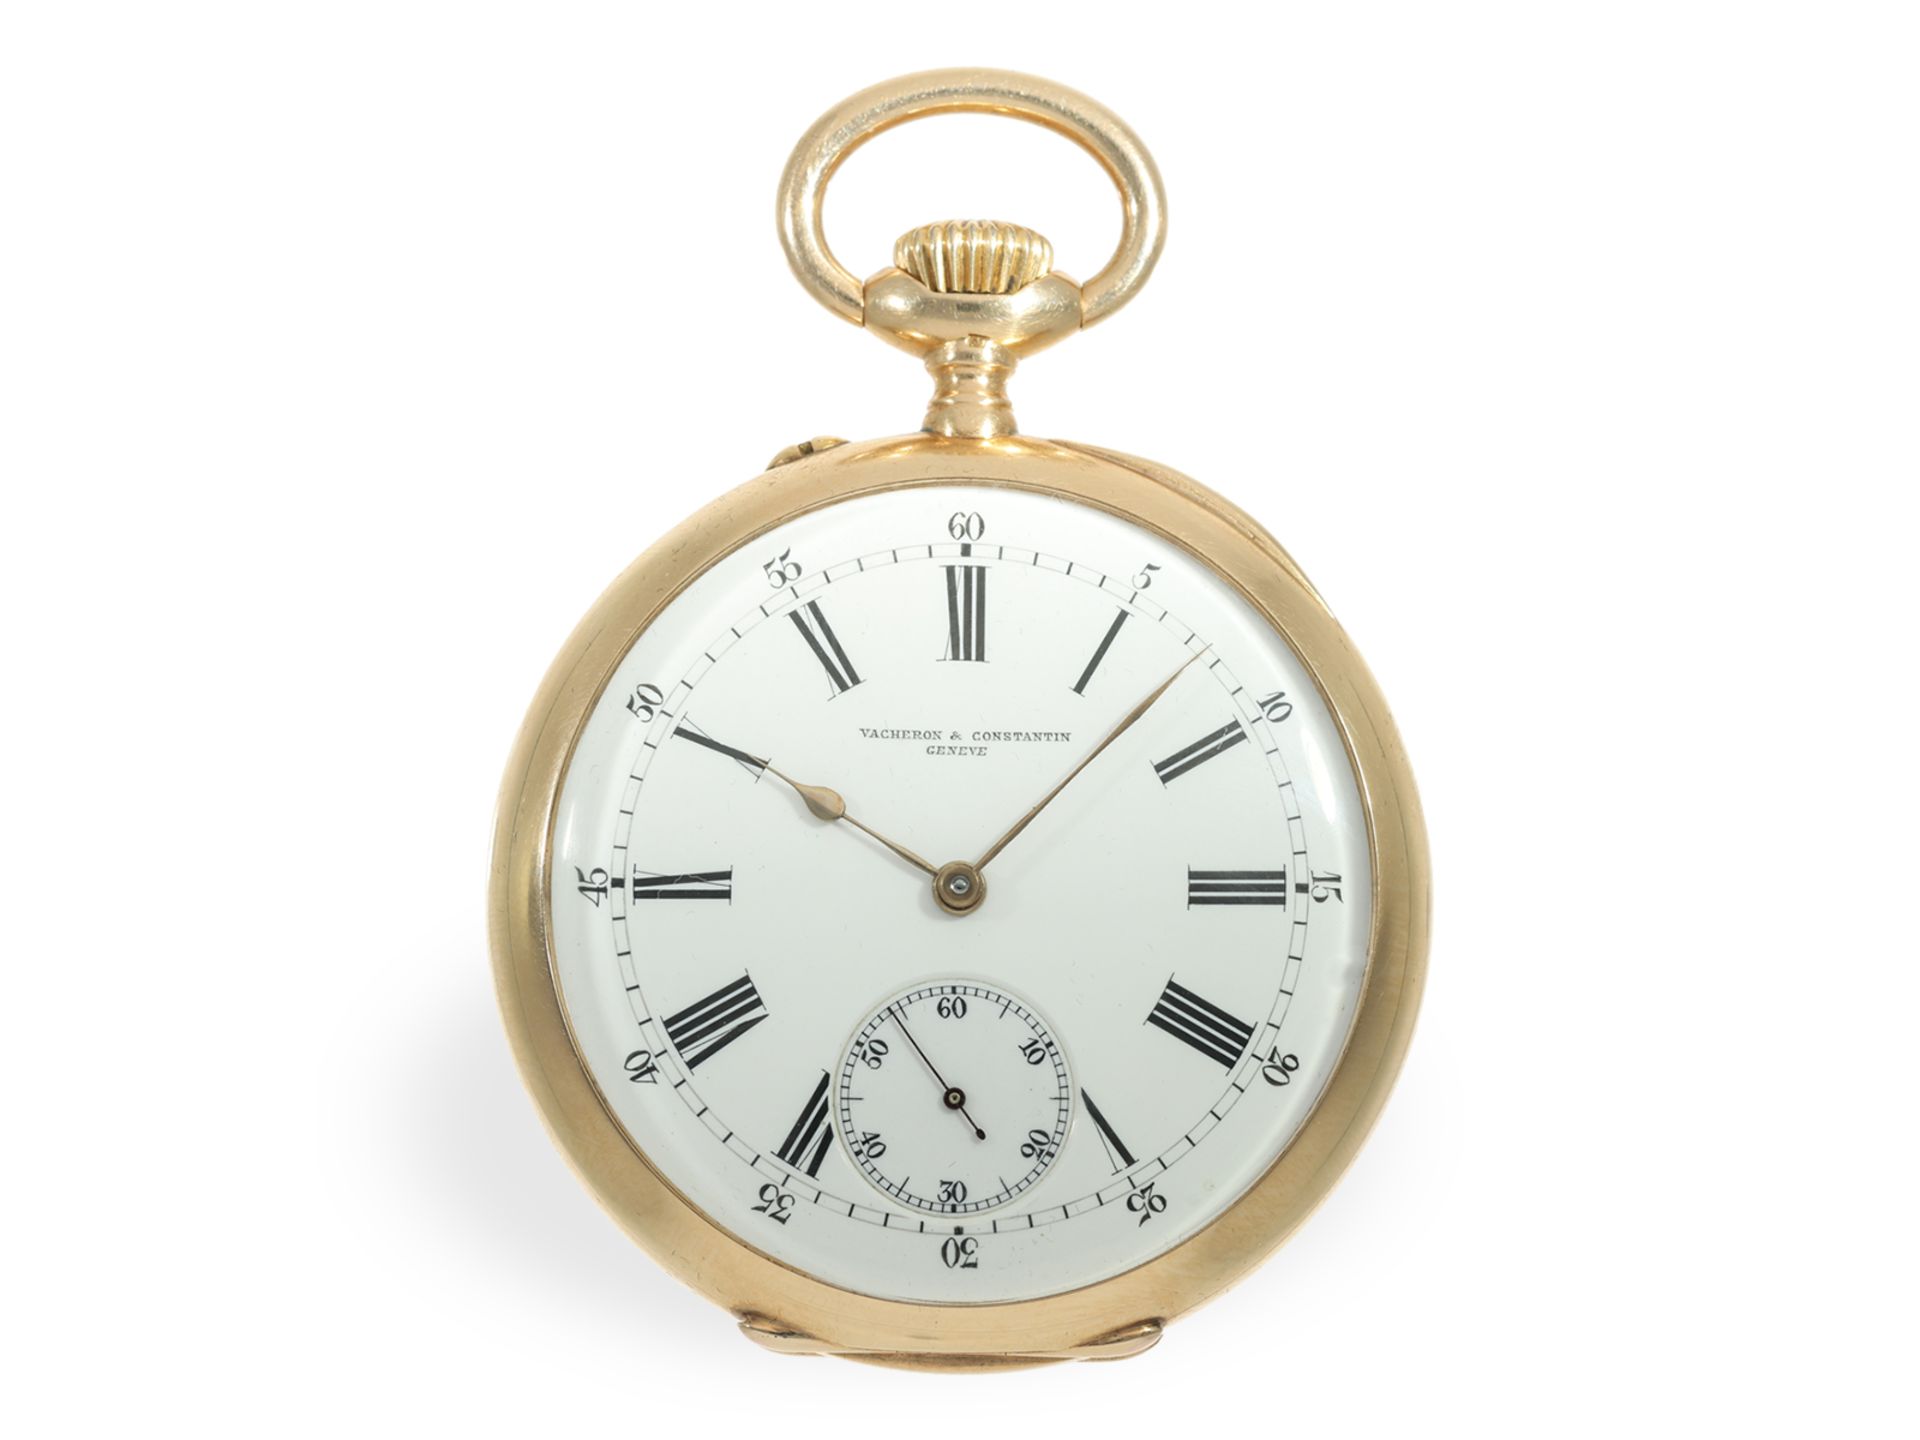 Pocket watch: very well preserved pocket chronometer by Vacheron & Constantin, ca. 1905